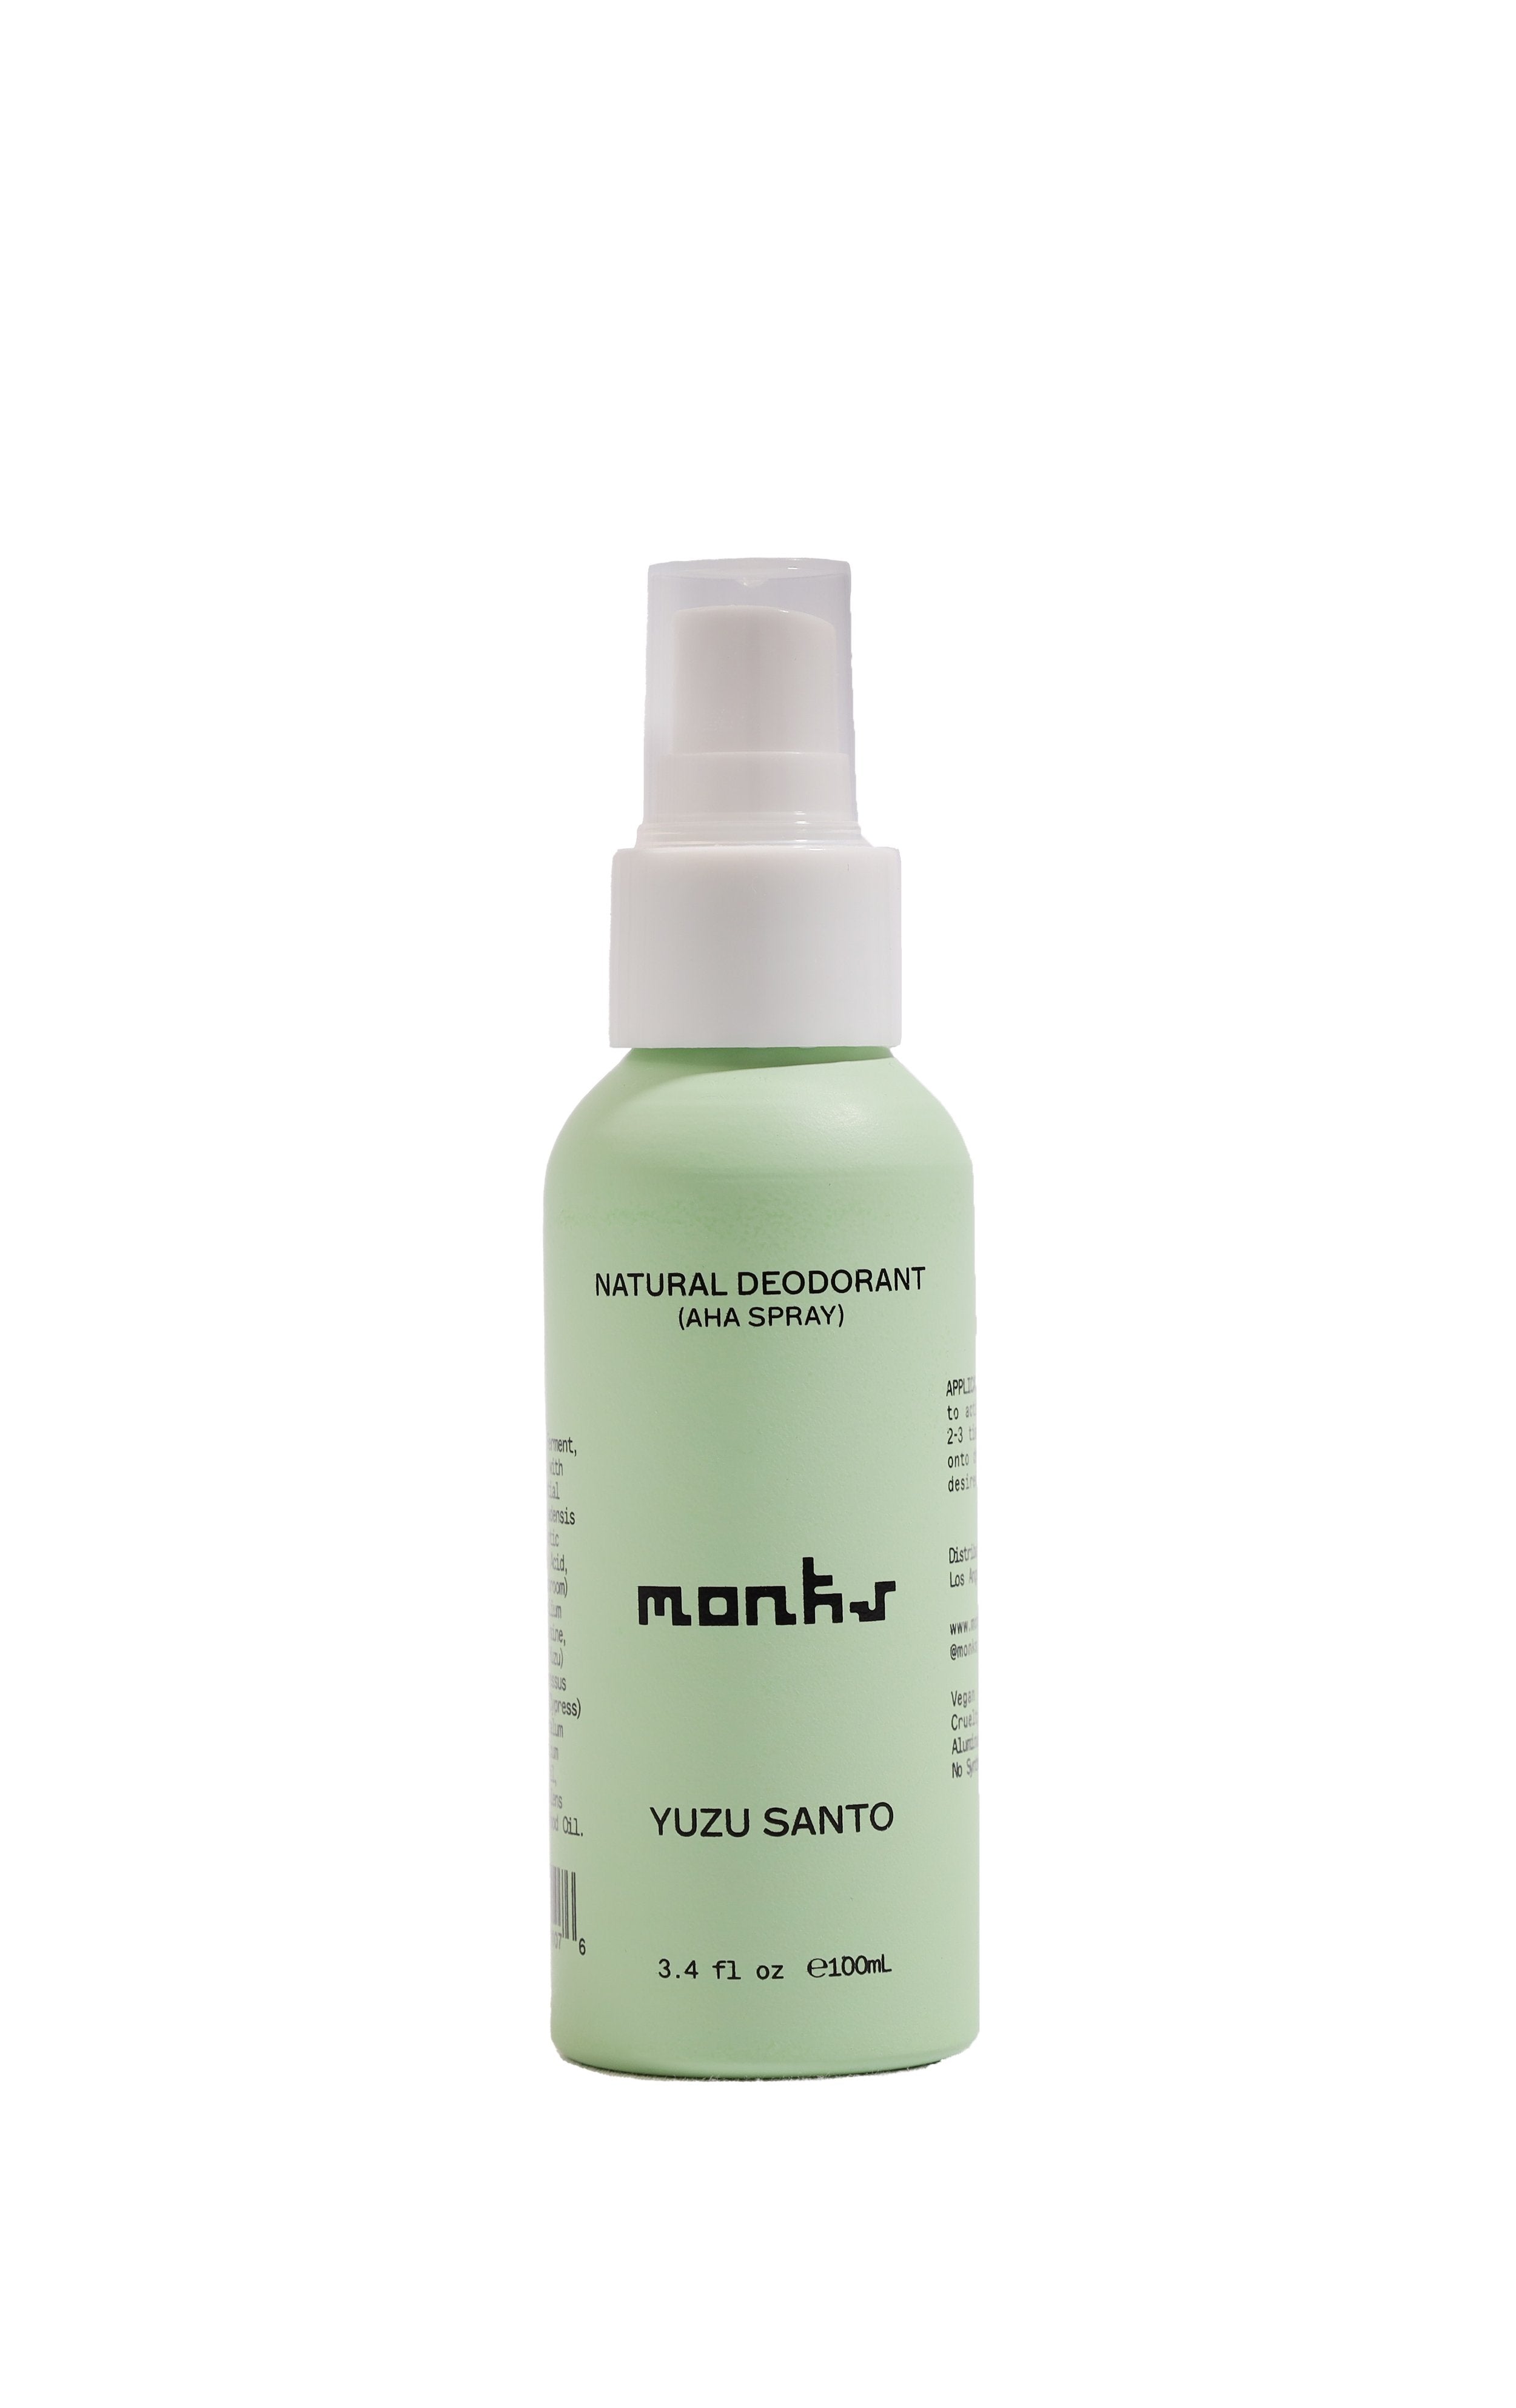 Monks - Yuzu Santo (Natural Deodorant Spray) - 3.4 fl oz